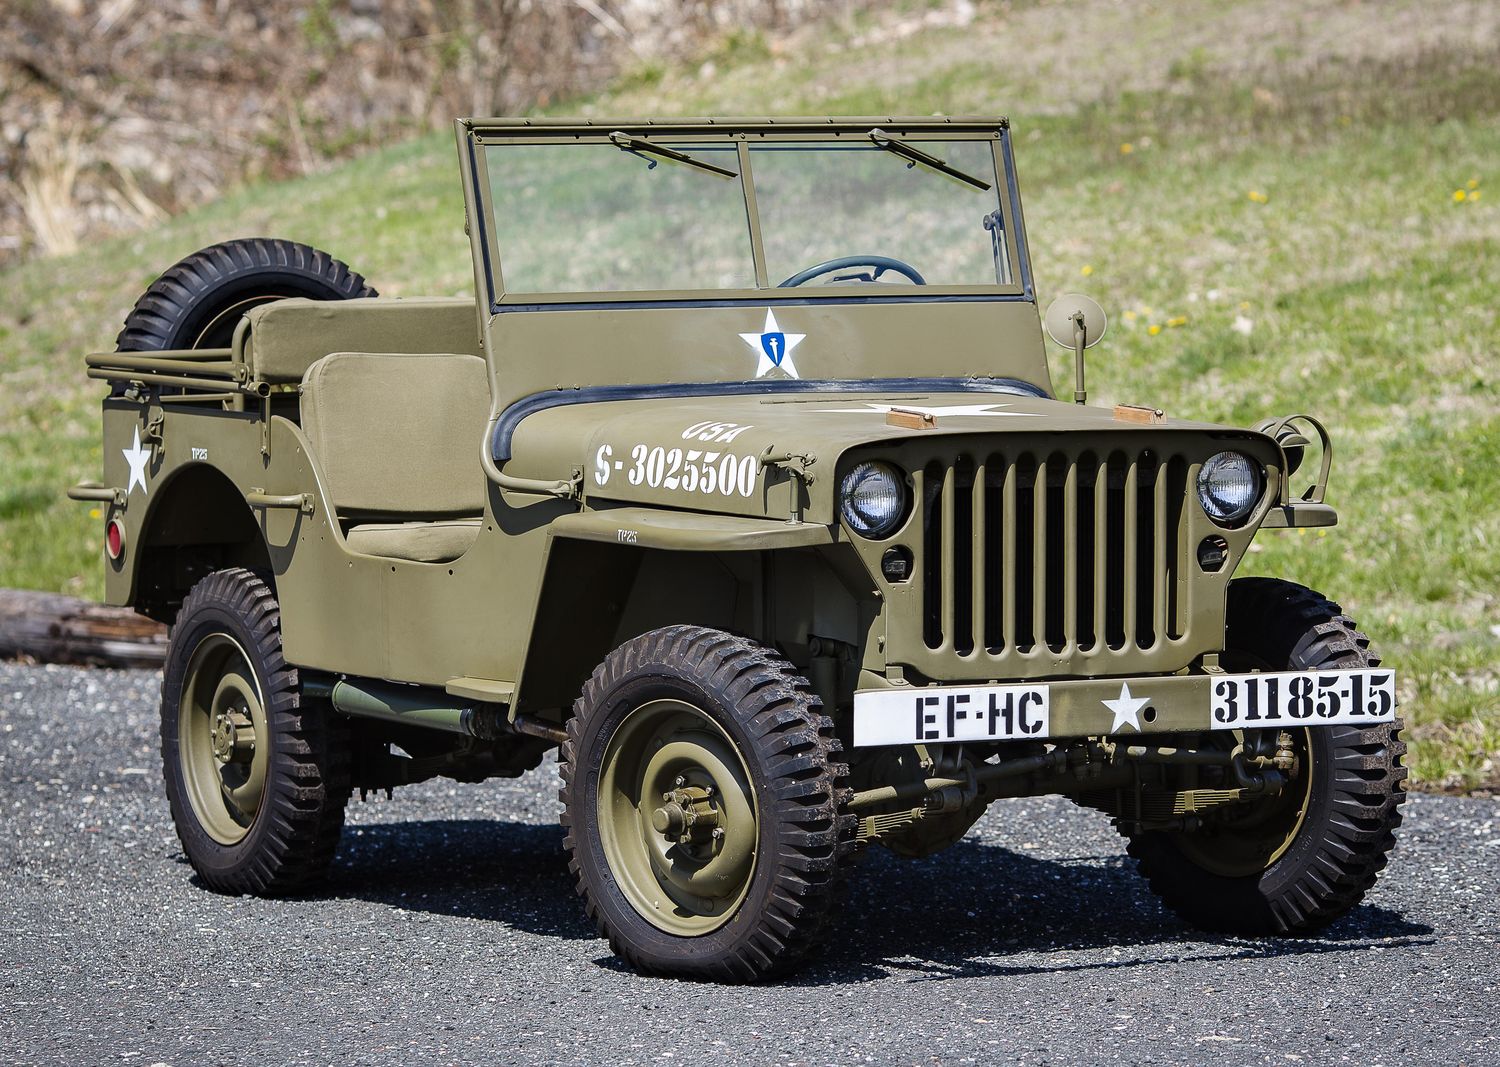 Jeep Wrangler станет современным «Виллисом» для армии США